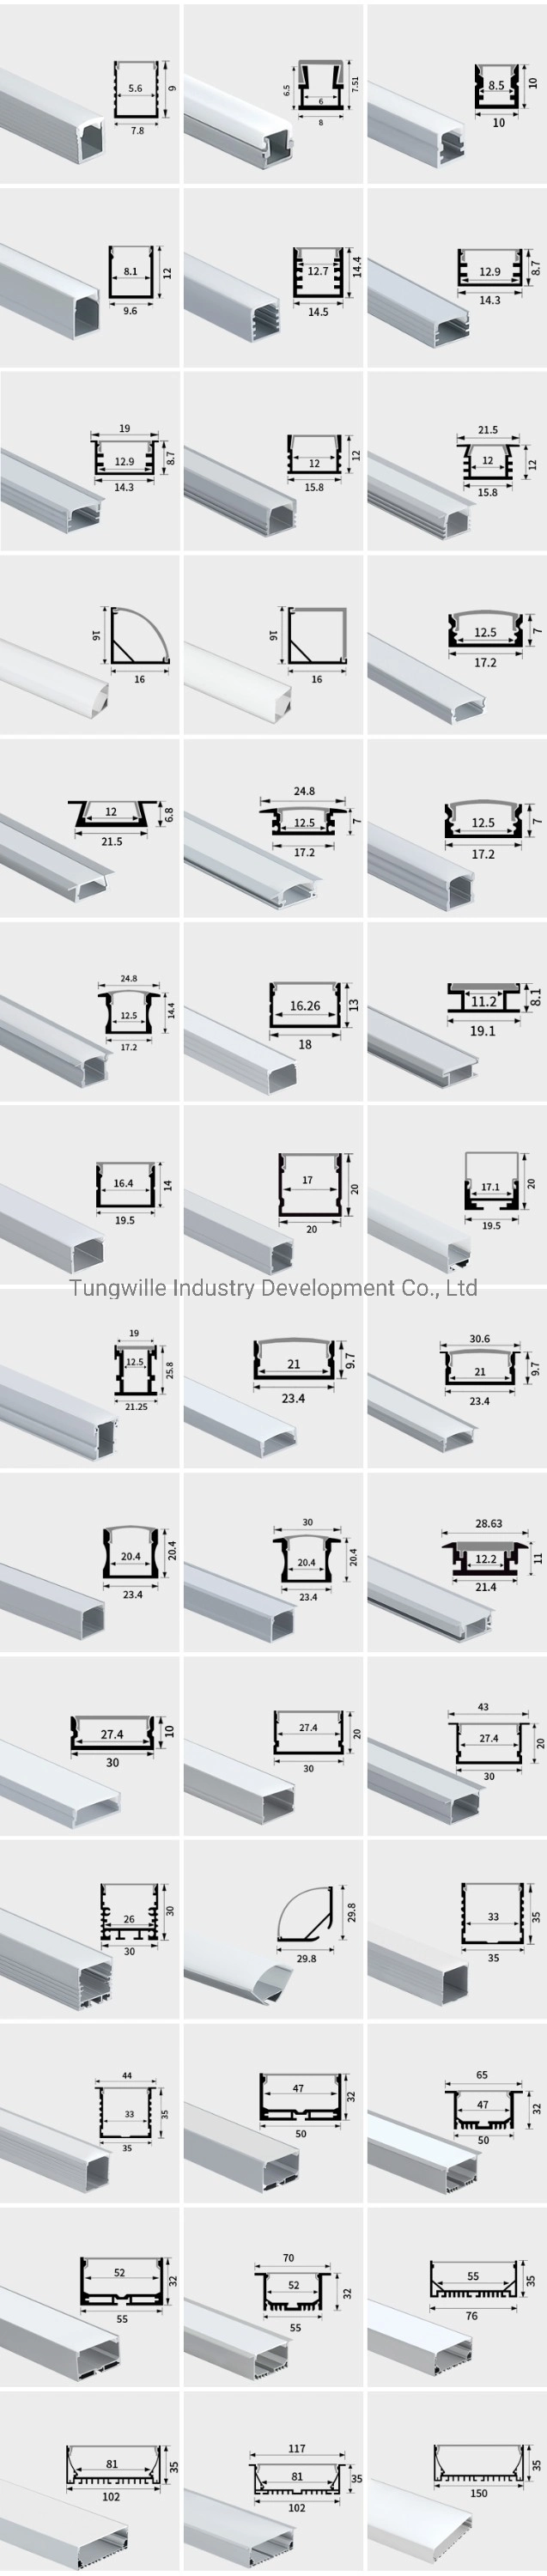 Factory Price Alu LED Profile Light Strip Plastic Channel, LED Strip Light LED Profile